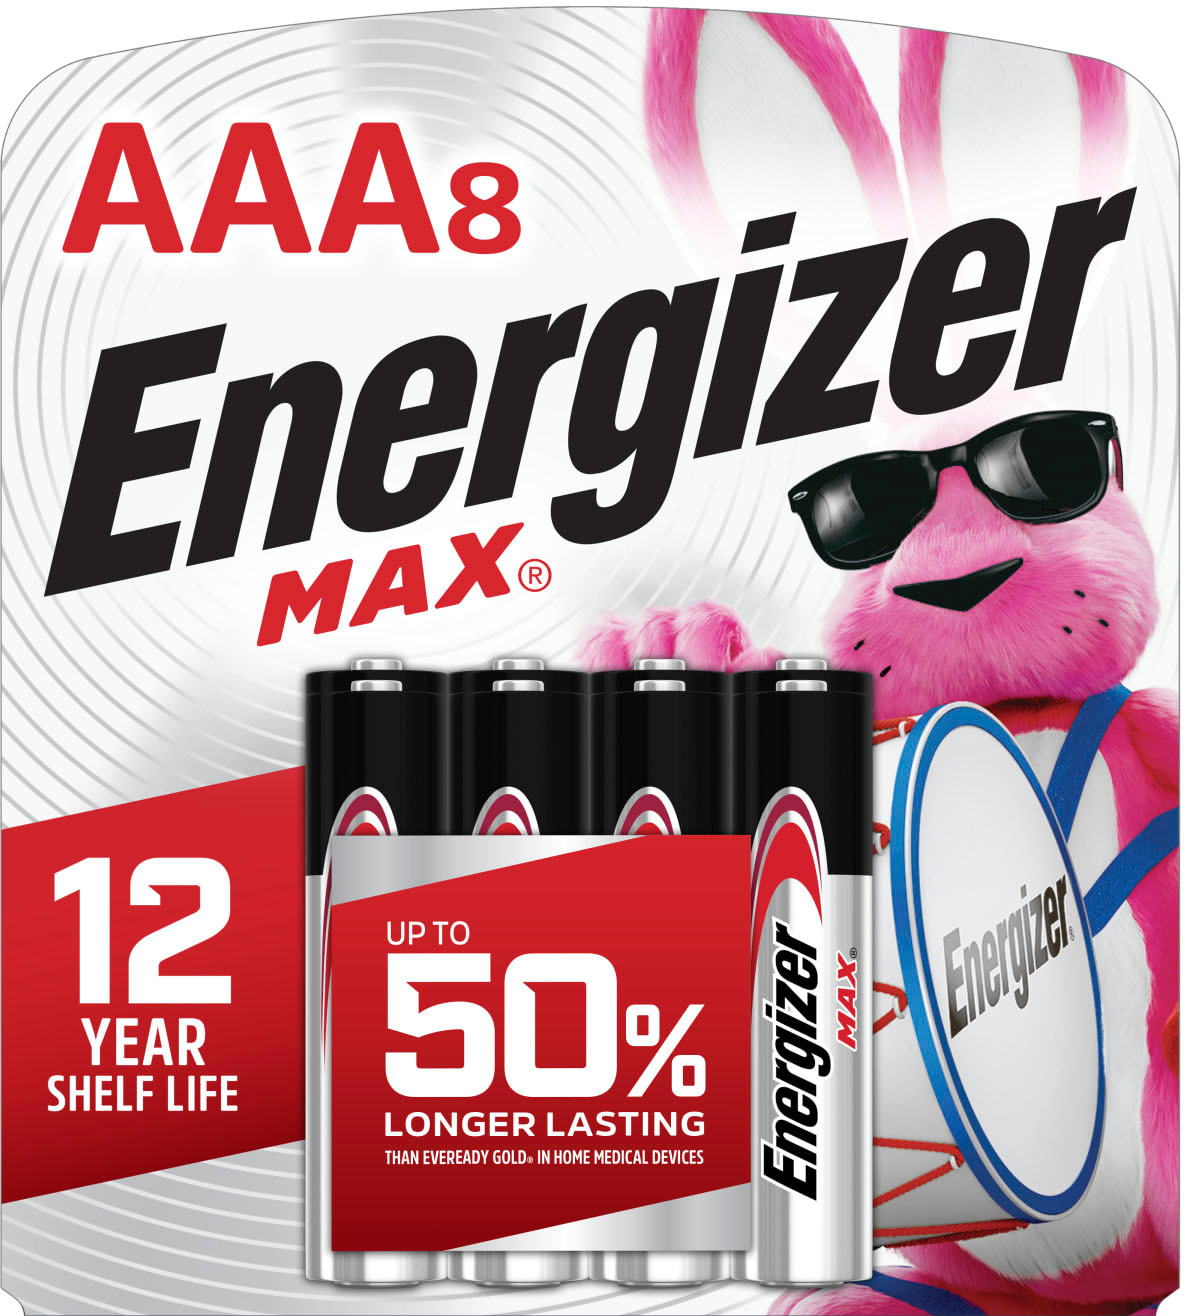 Energizer Ultimate Lithium AAA Batteries (8 Pack), Triple A Batteries  L92SBP-8 - Best Buy